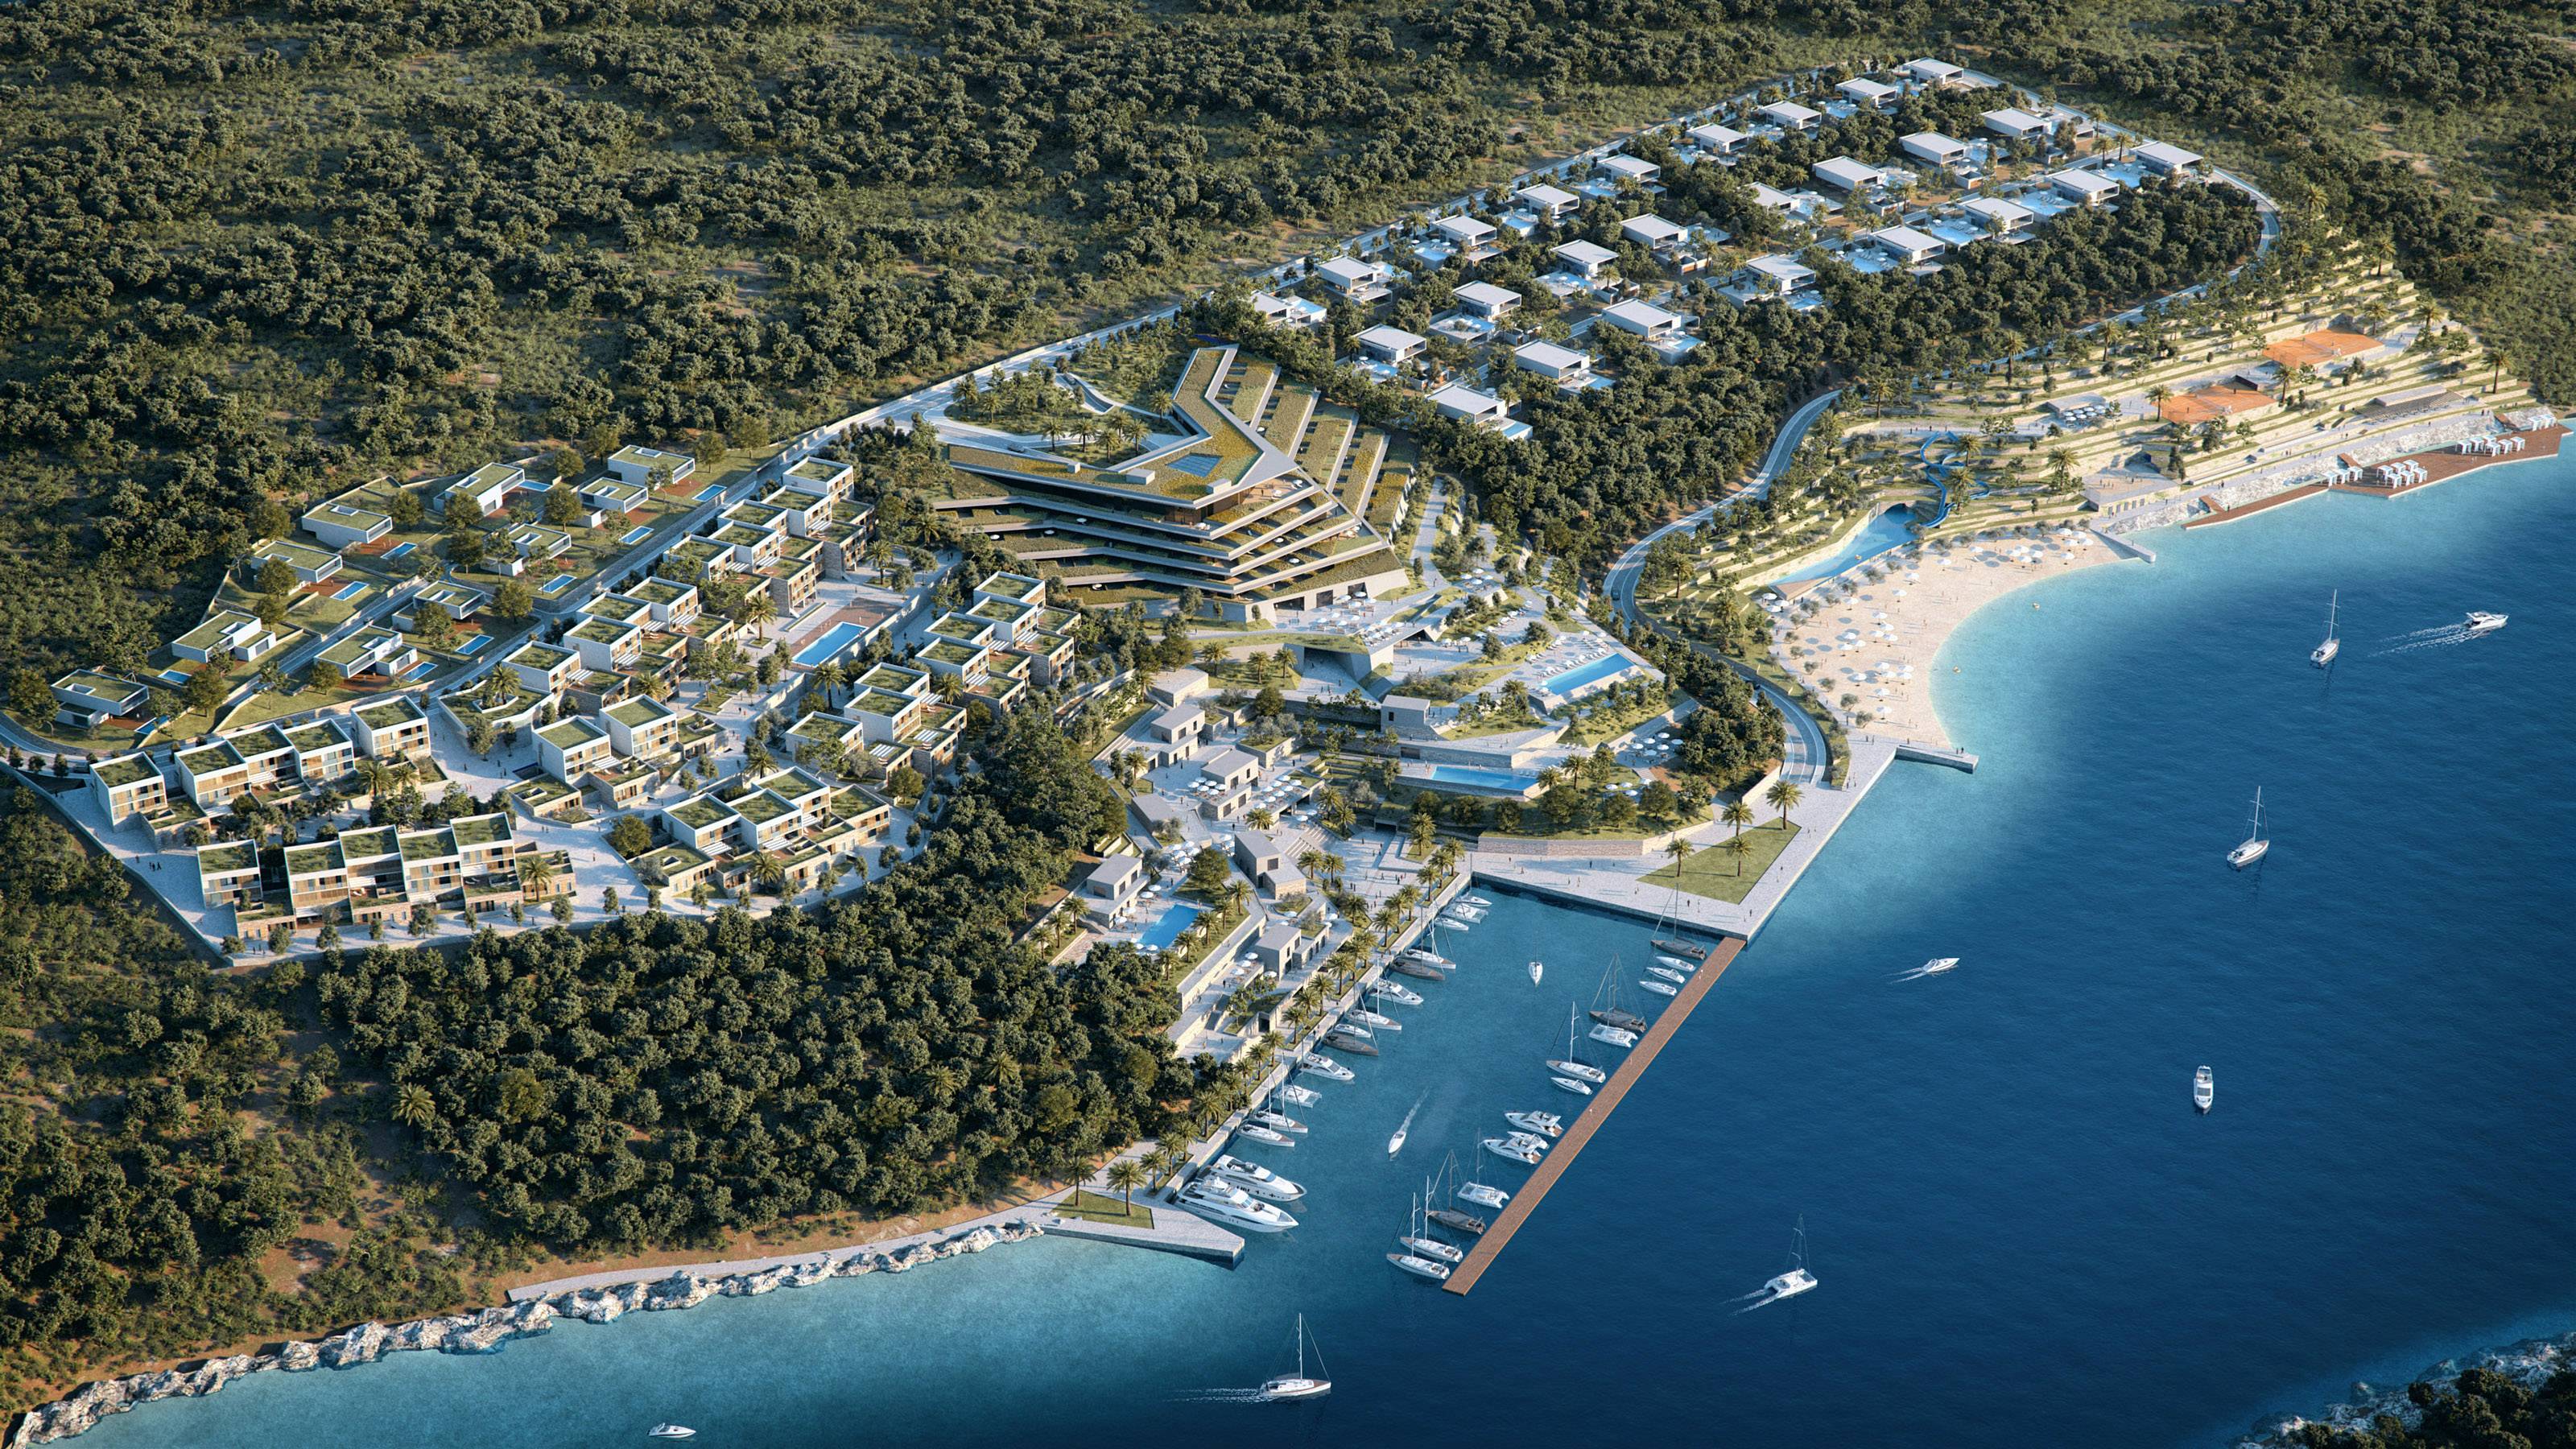 Premium turistic project on island Brač, Croatia - investment opportunity